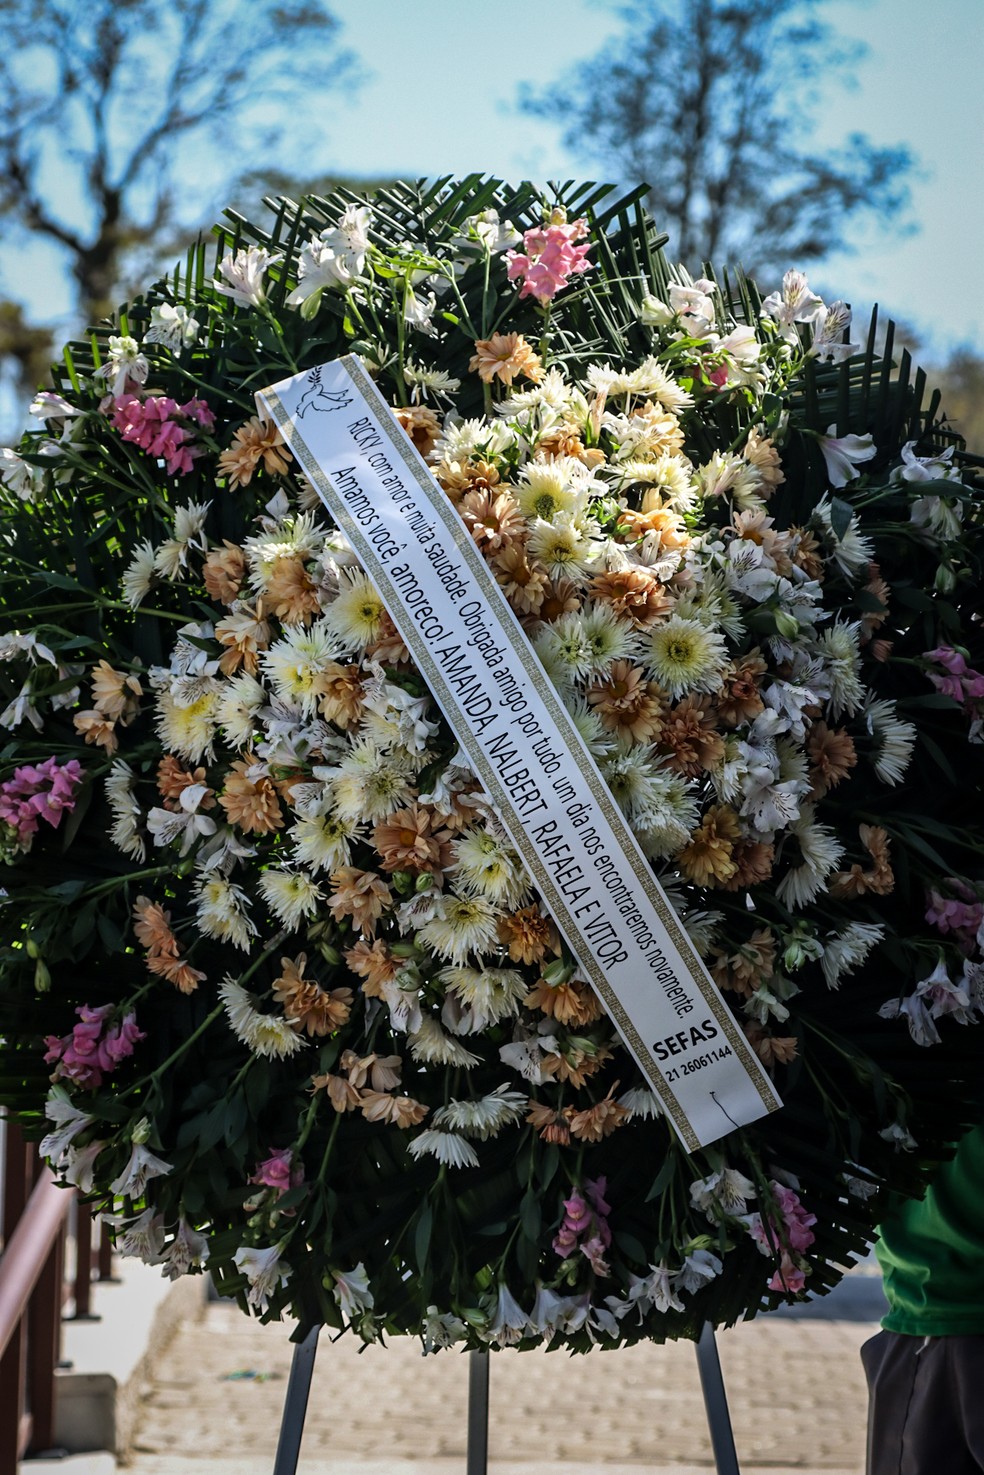 Coroa de flores enviadapor Amandha Lee e Nalbert ao velório de Rico Tavares — Foto: AgNews